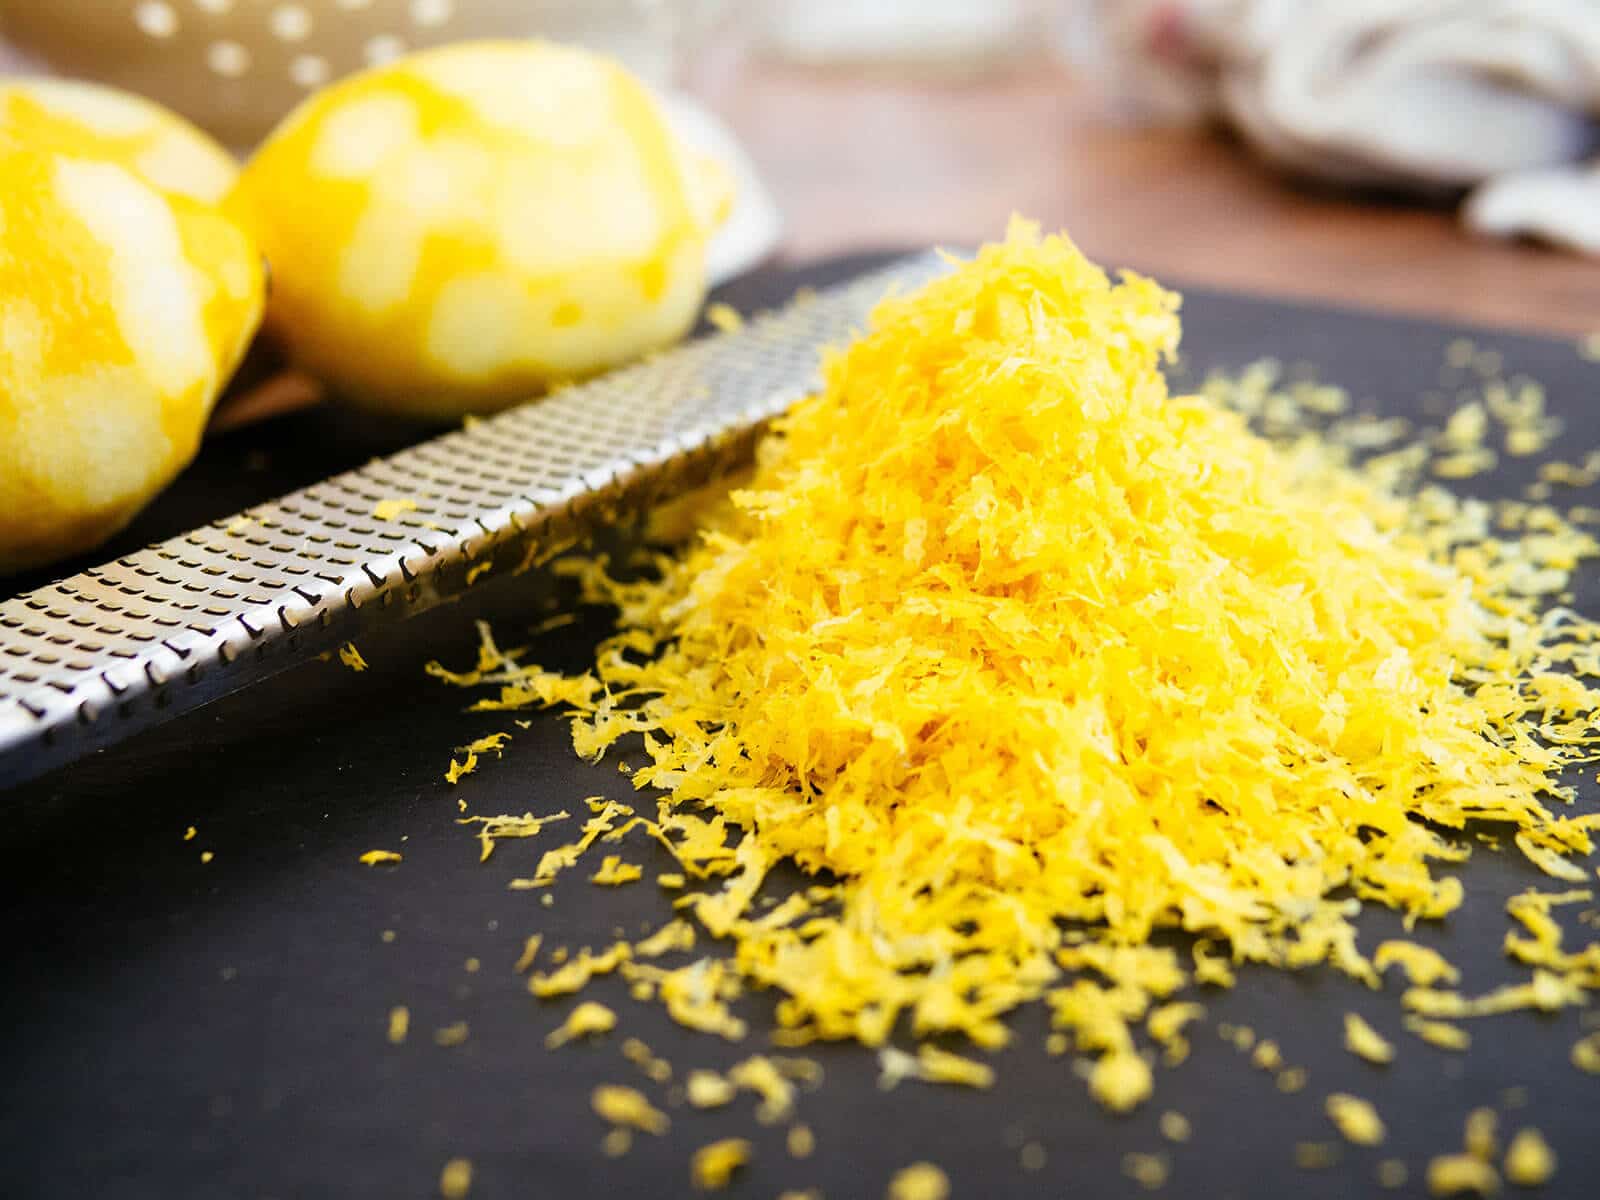 Mound of lemon zest on a cutting board